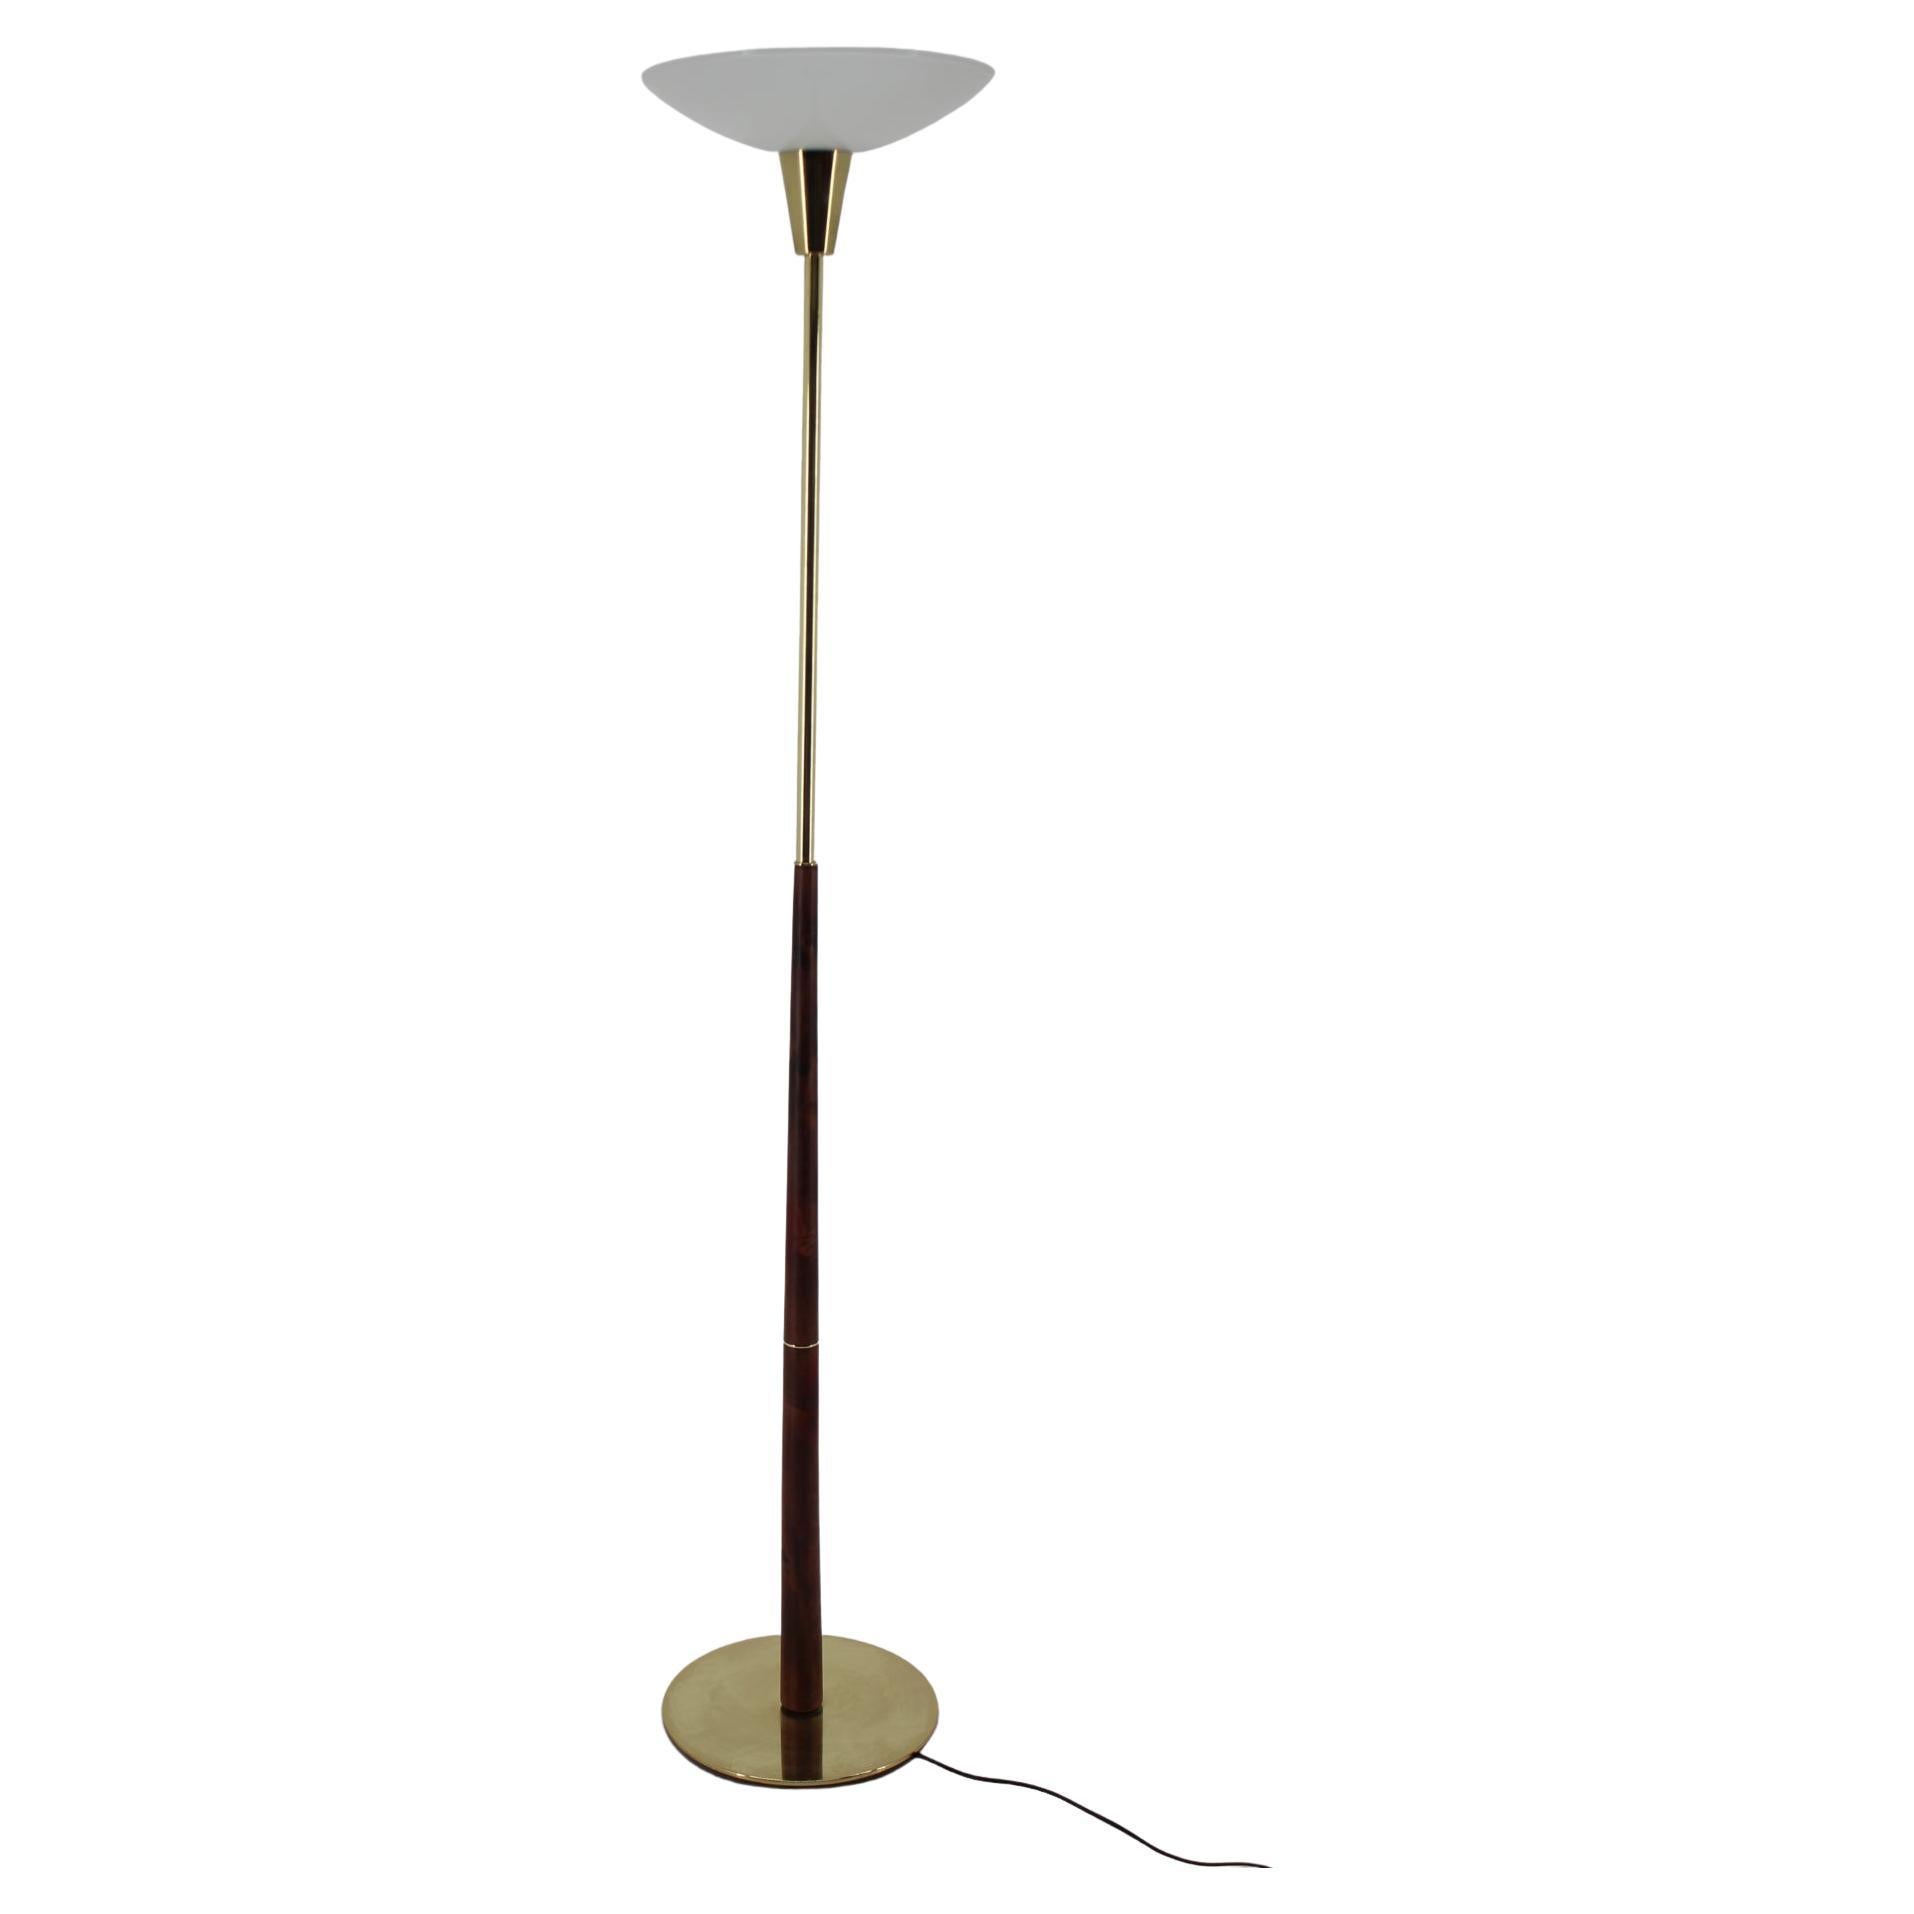 1980s Danish Design Floor Lamp